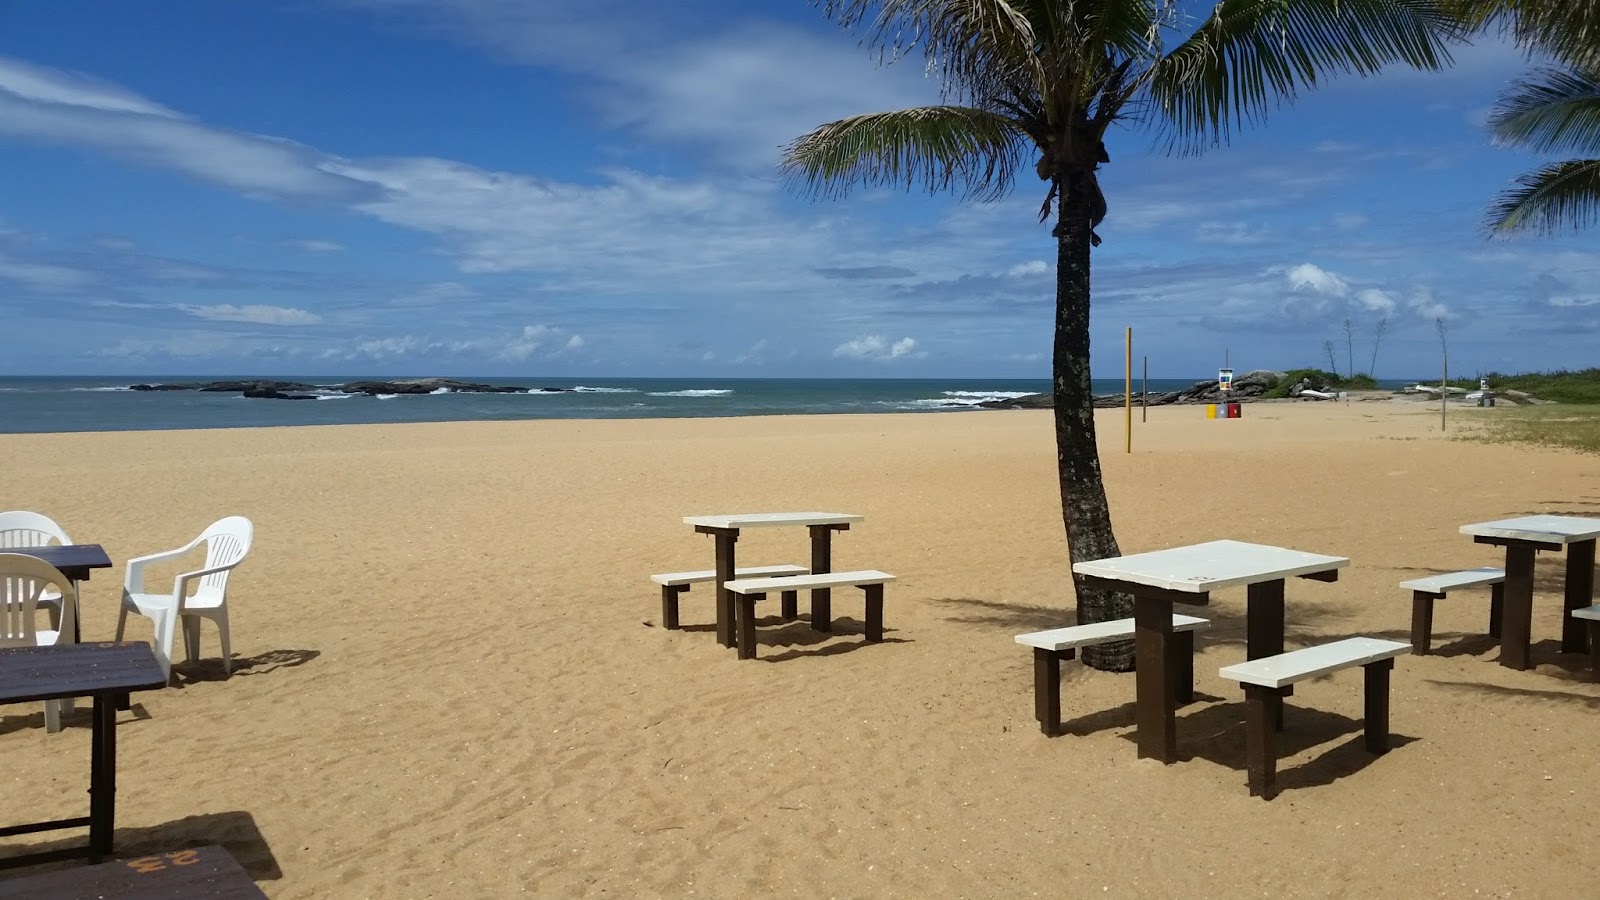 Foto de Praia Mar do Norte - lugar popular entre os apreciadores de relaxamento